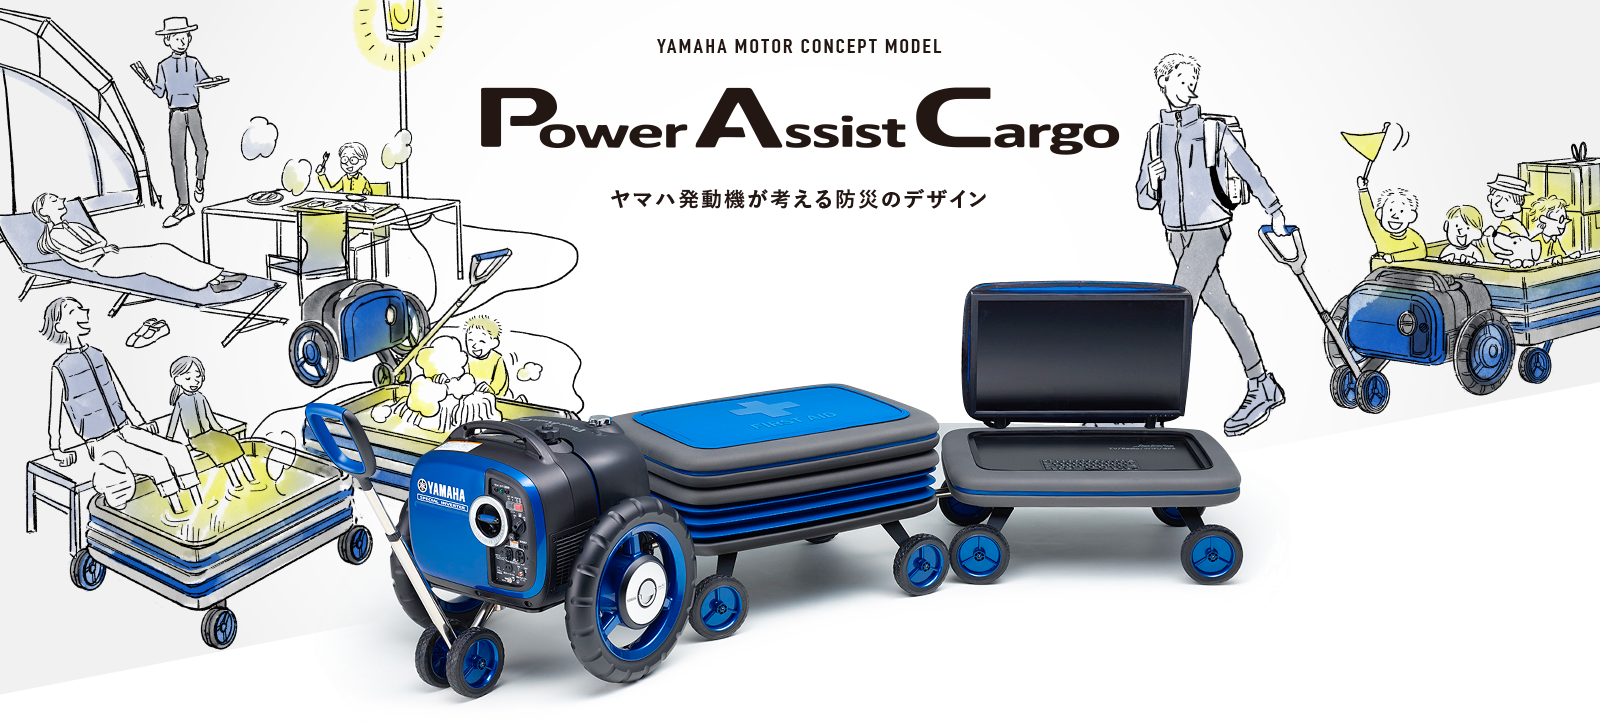 Power Assist Cargo